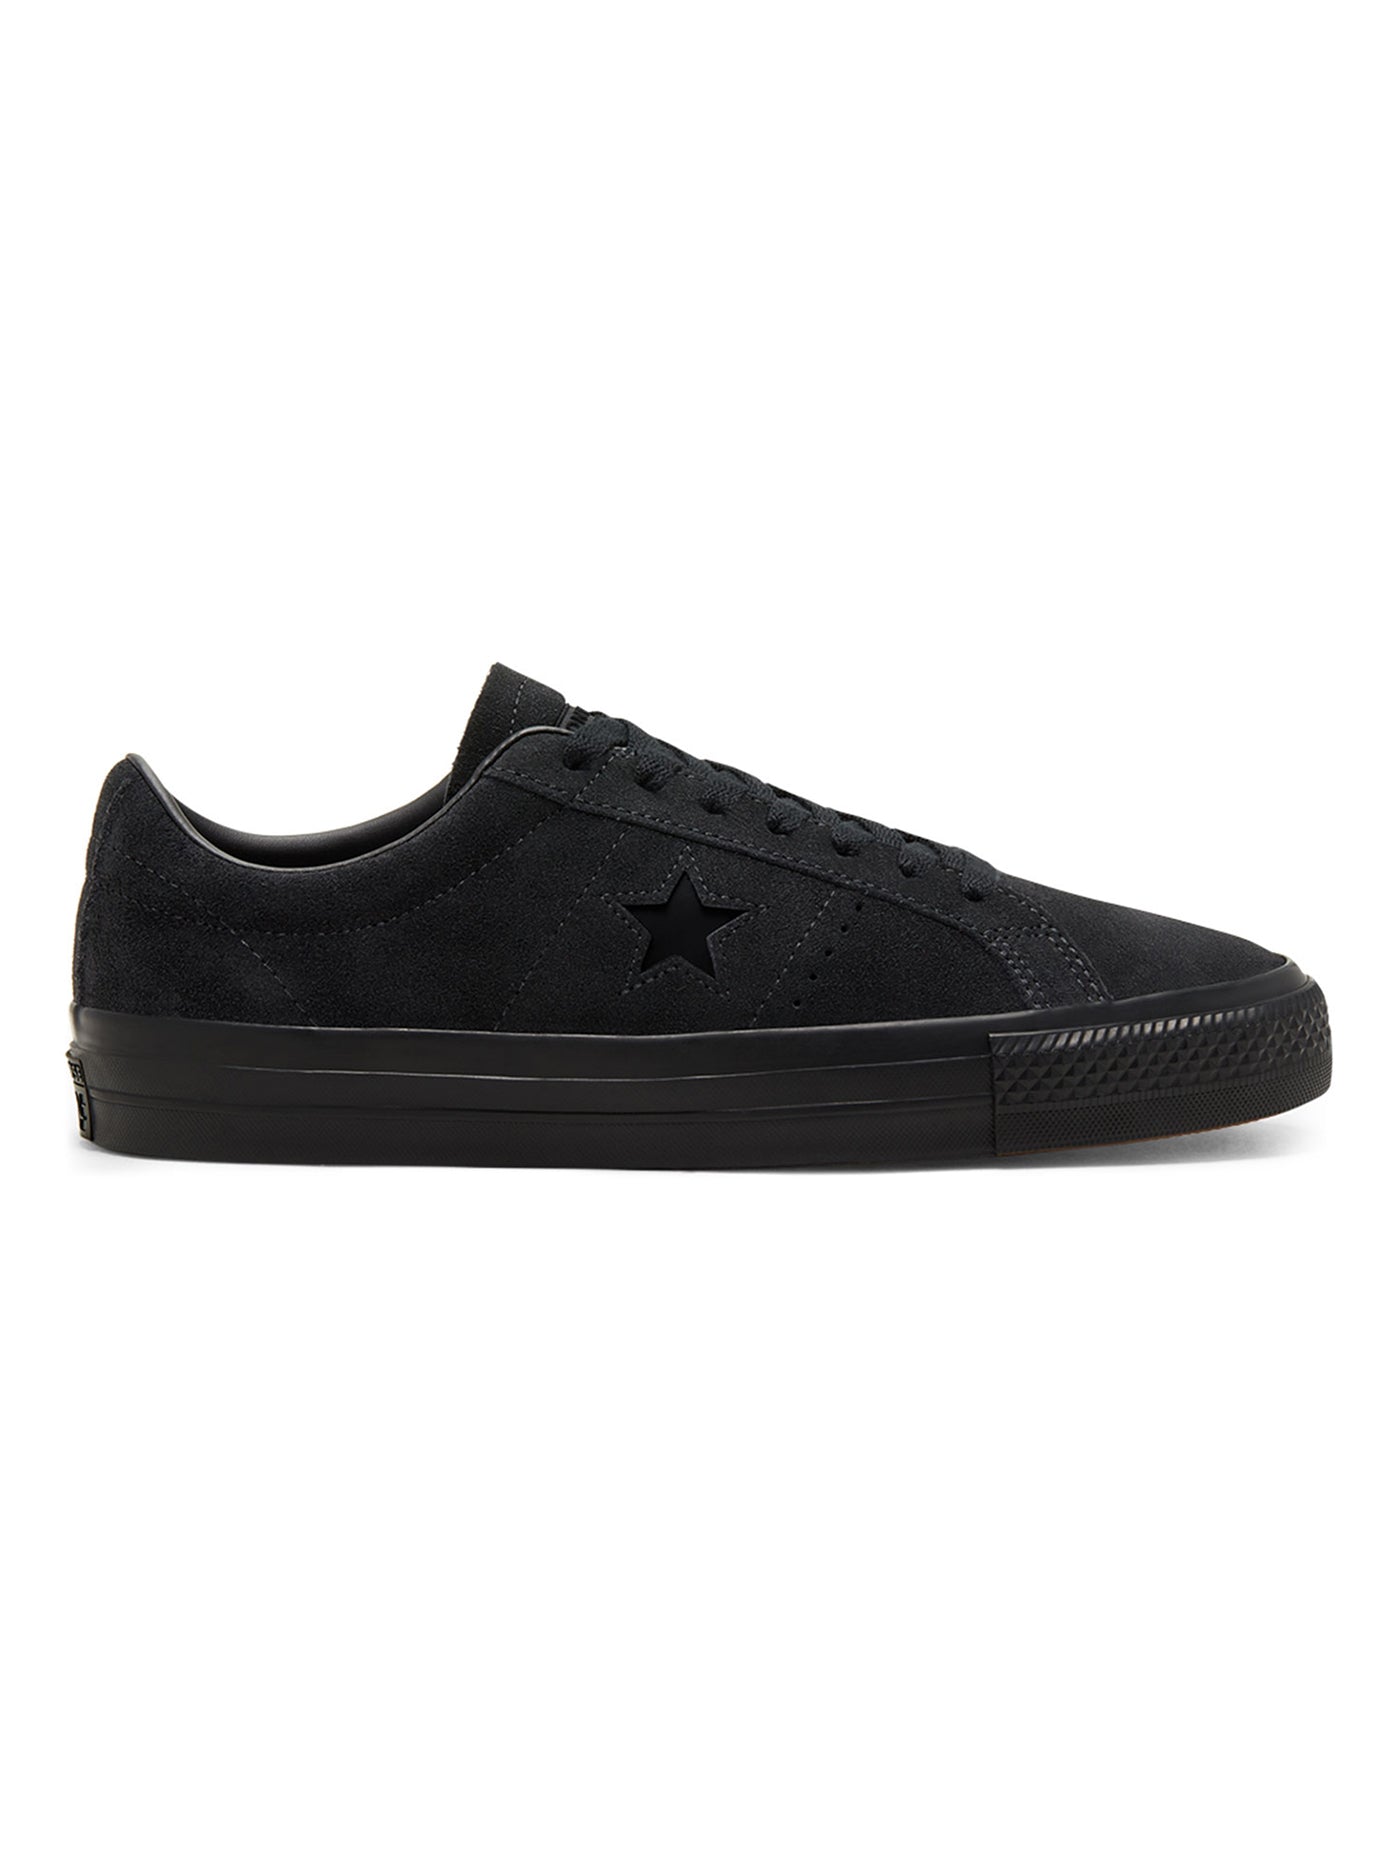 Converse One Star Pro OX Black/Black/Black Shoes